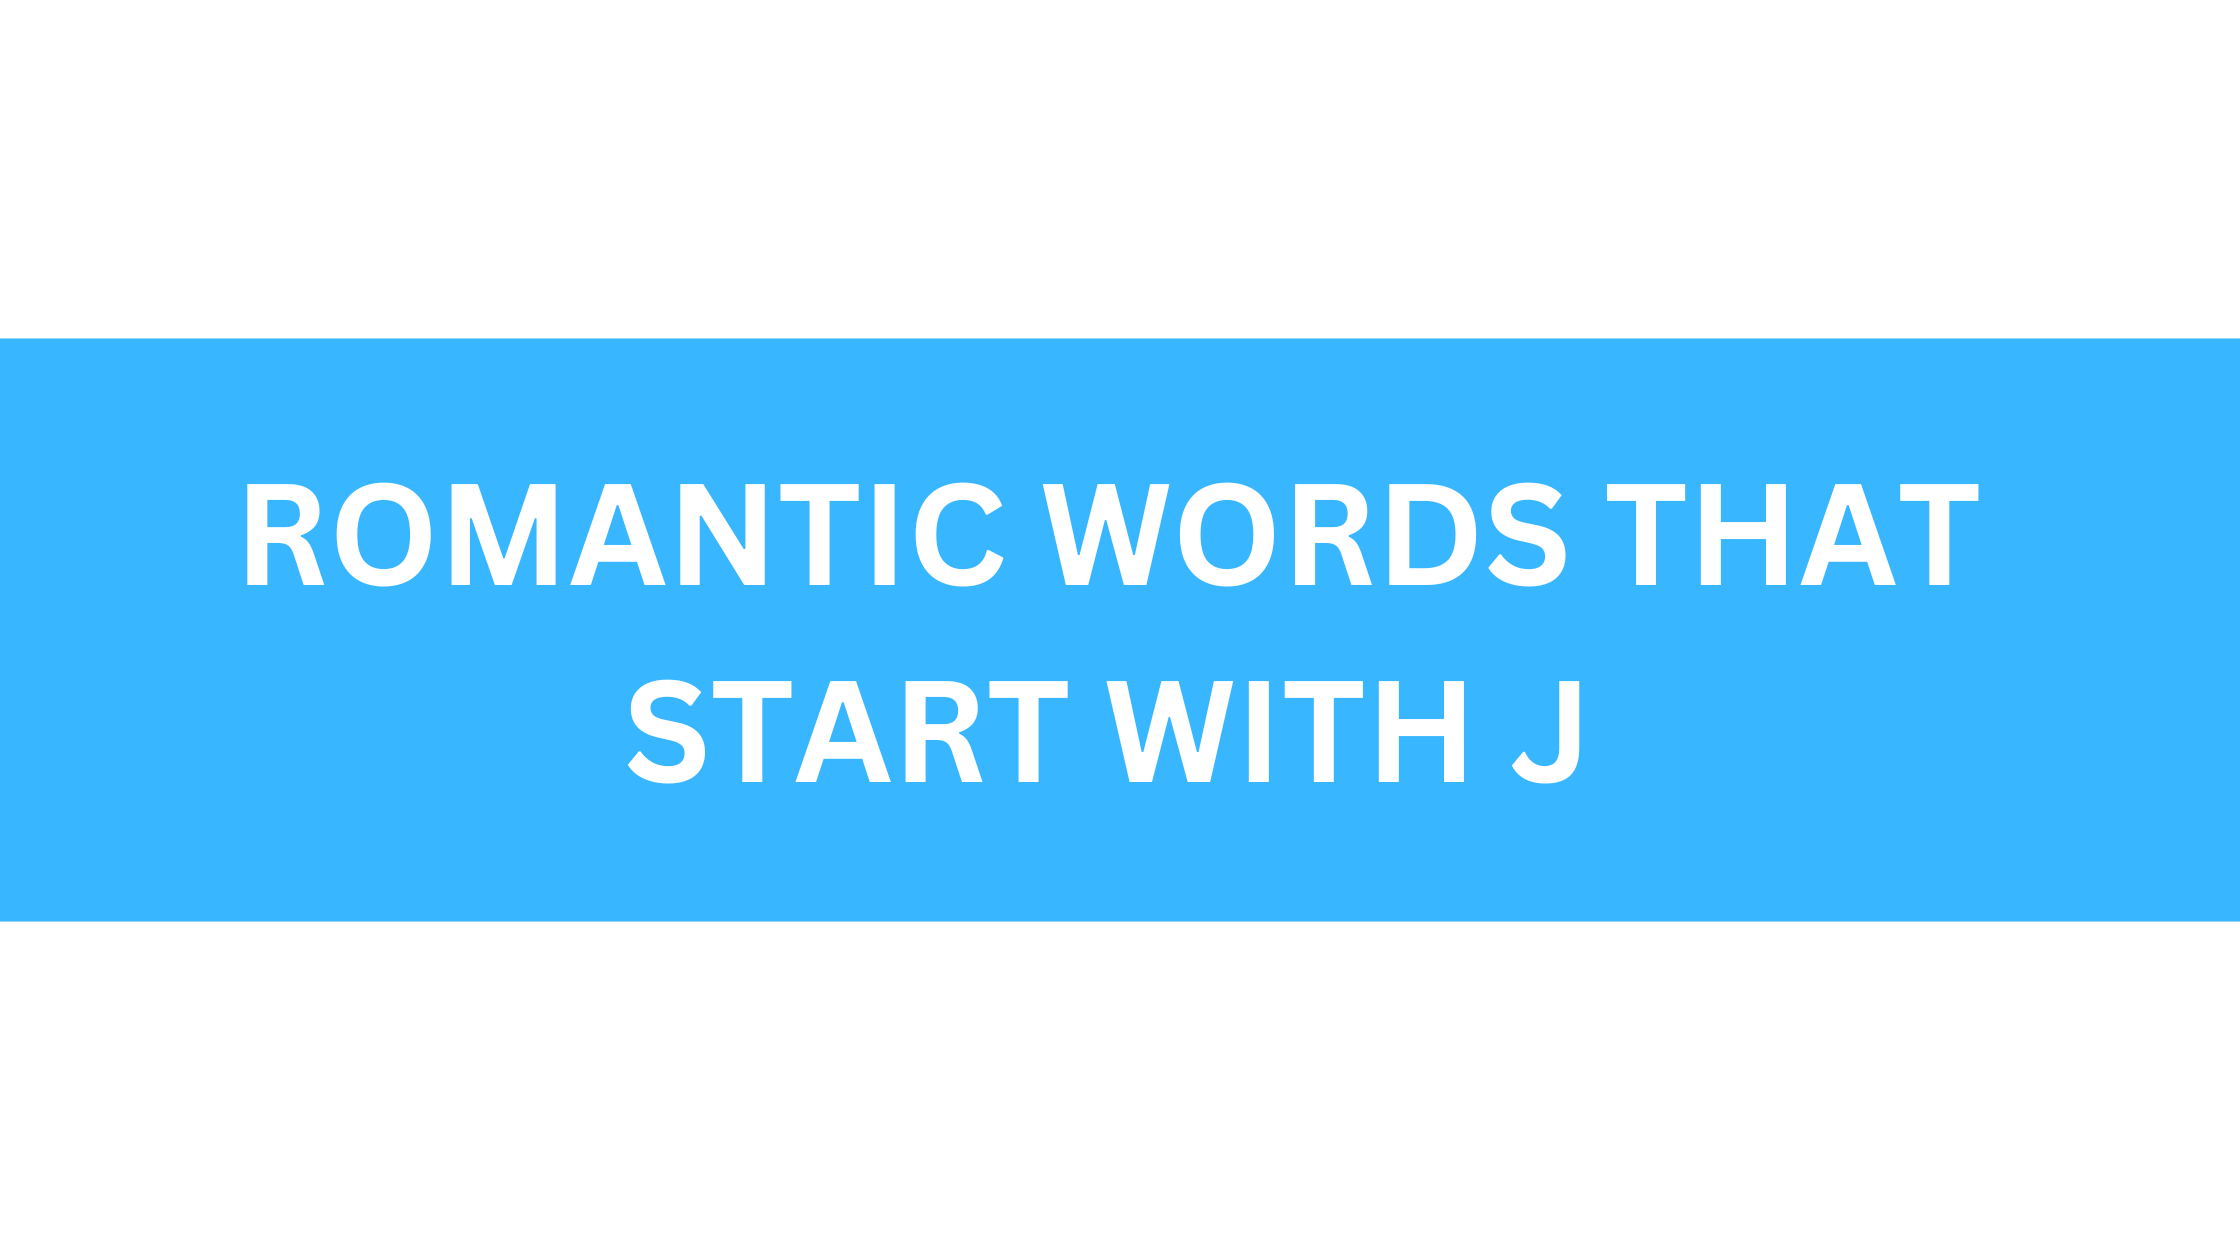 romantics words that start with j